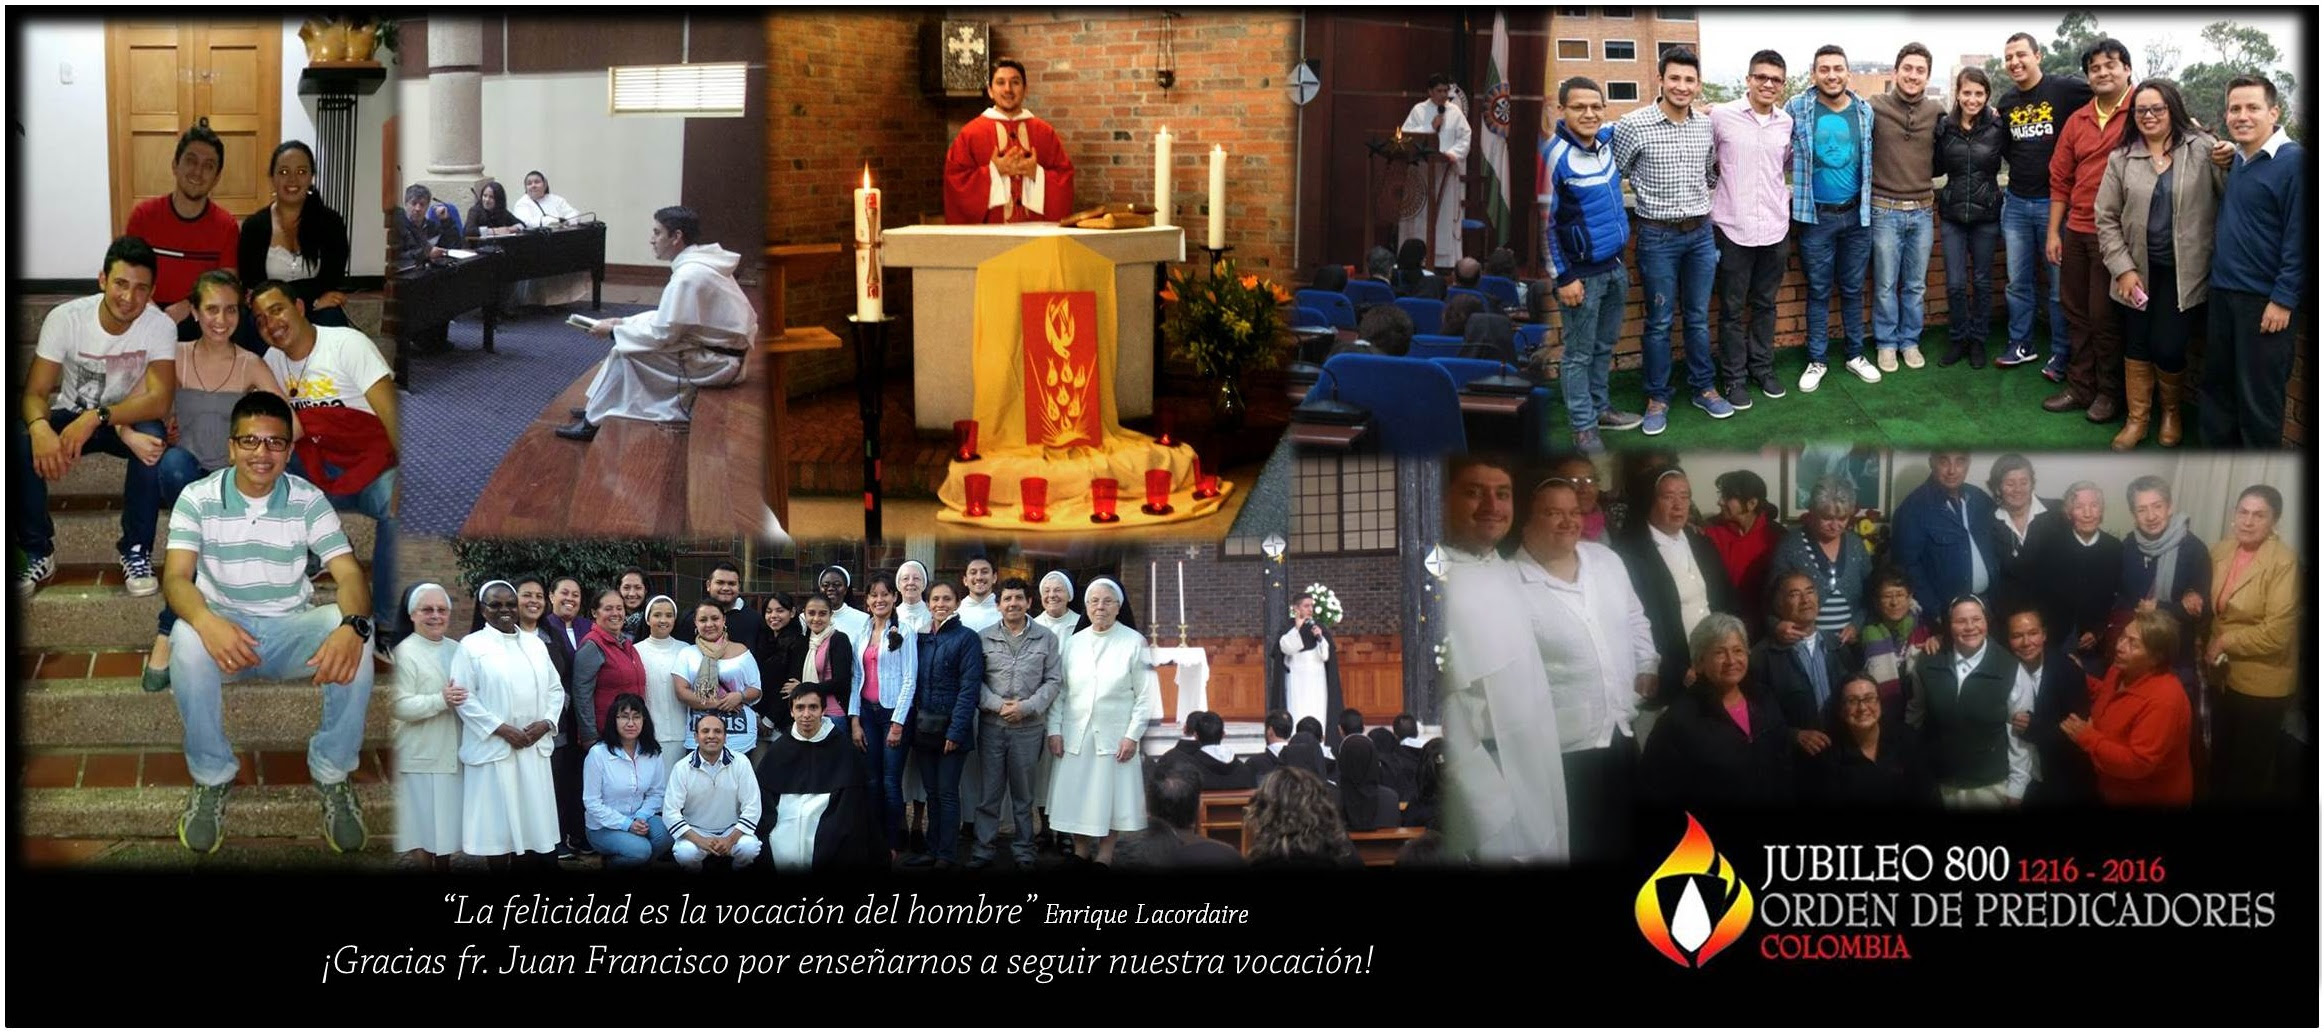 https://fadomcolombia.files.wordpress.com/2015/09/collage-fr-juan-francisco-ii1.jpg